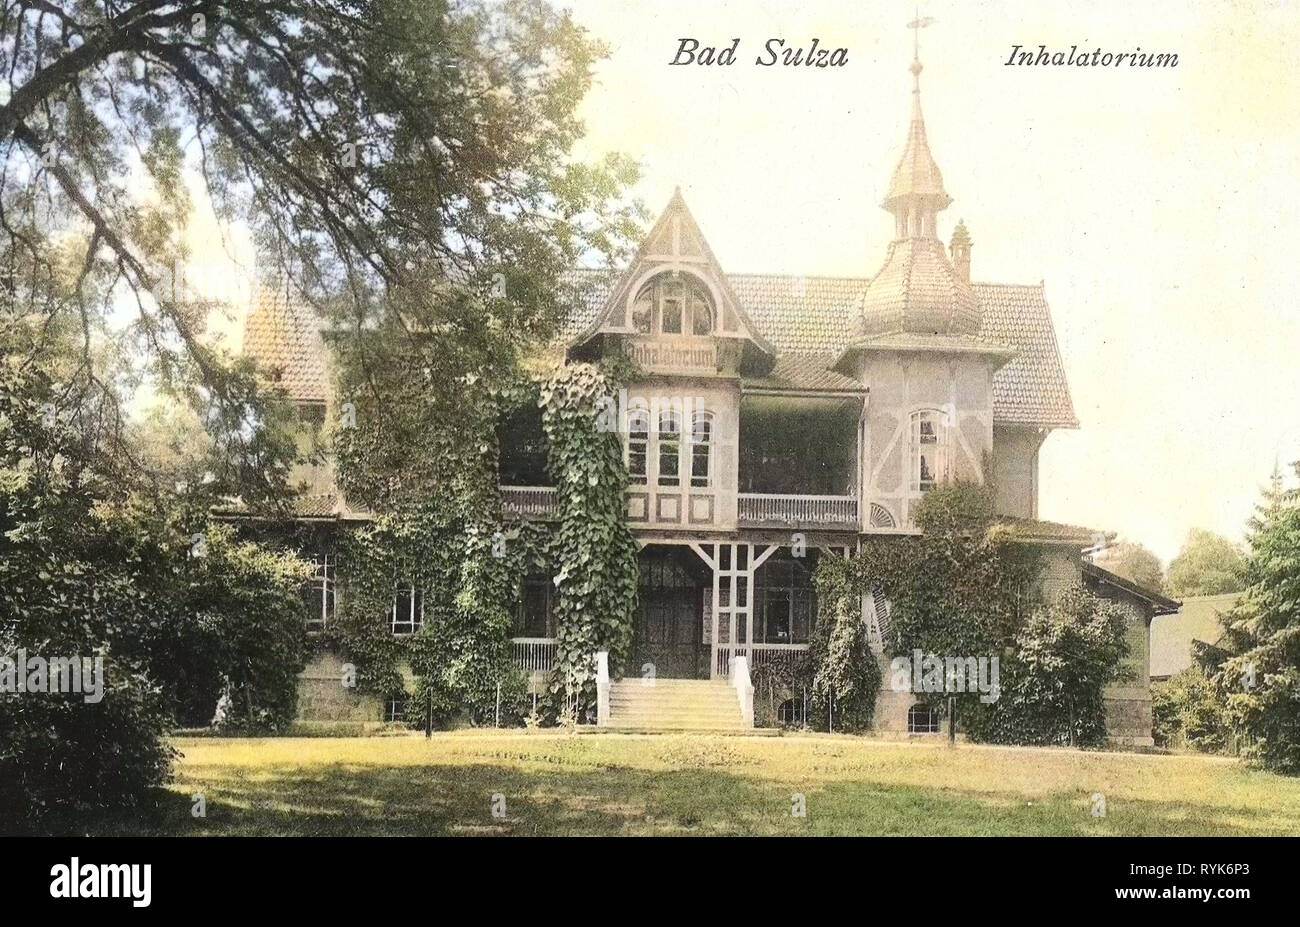 Bâtiments à Bad Sulza, Spa les bâtiments en Allemagne, en 1918, la Thuringe, Bad Sulza, Inhalatorium Banque D'Images